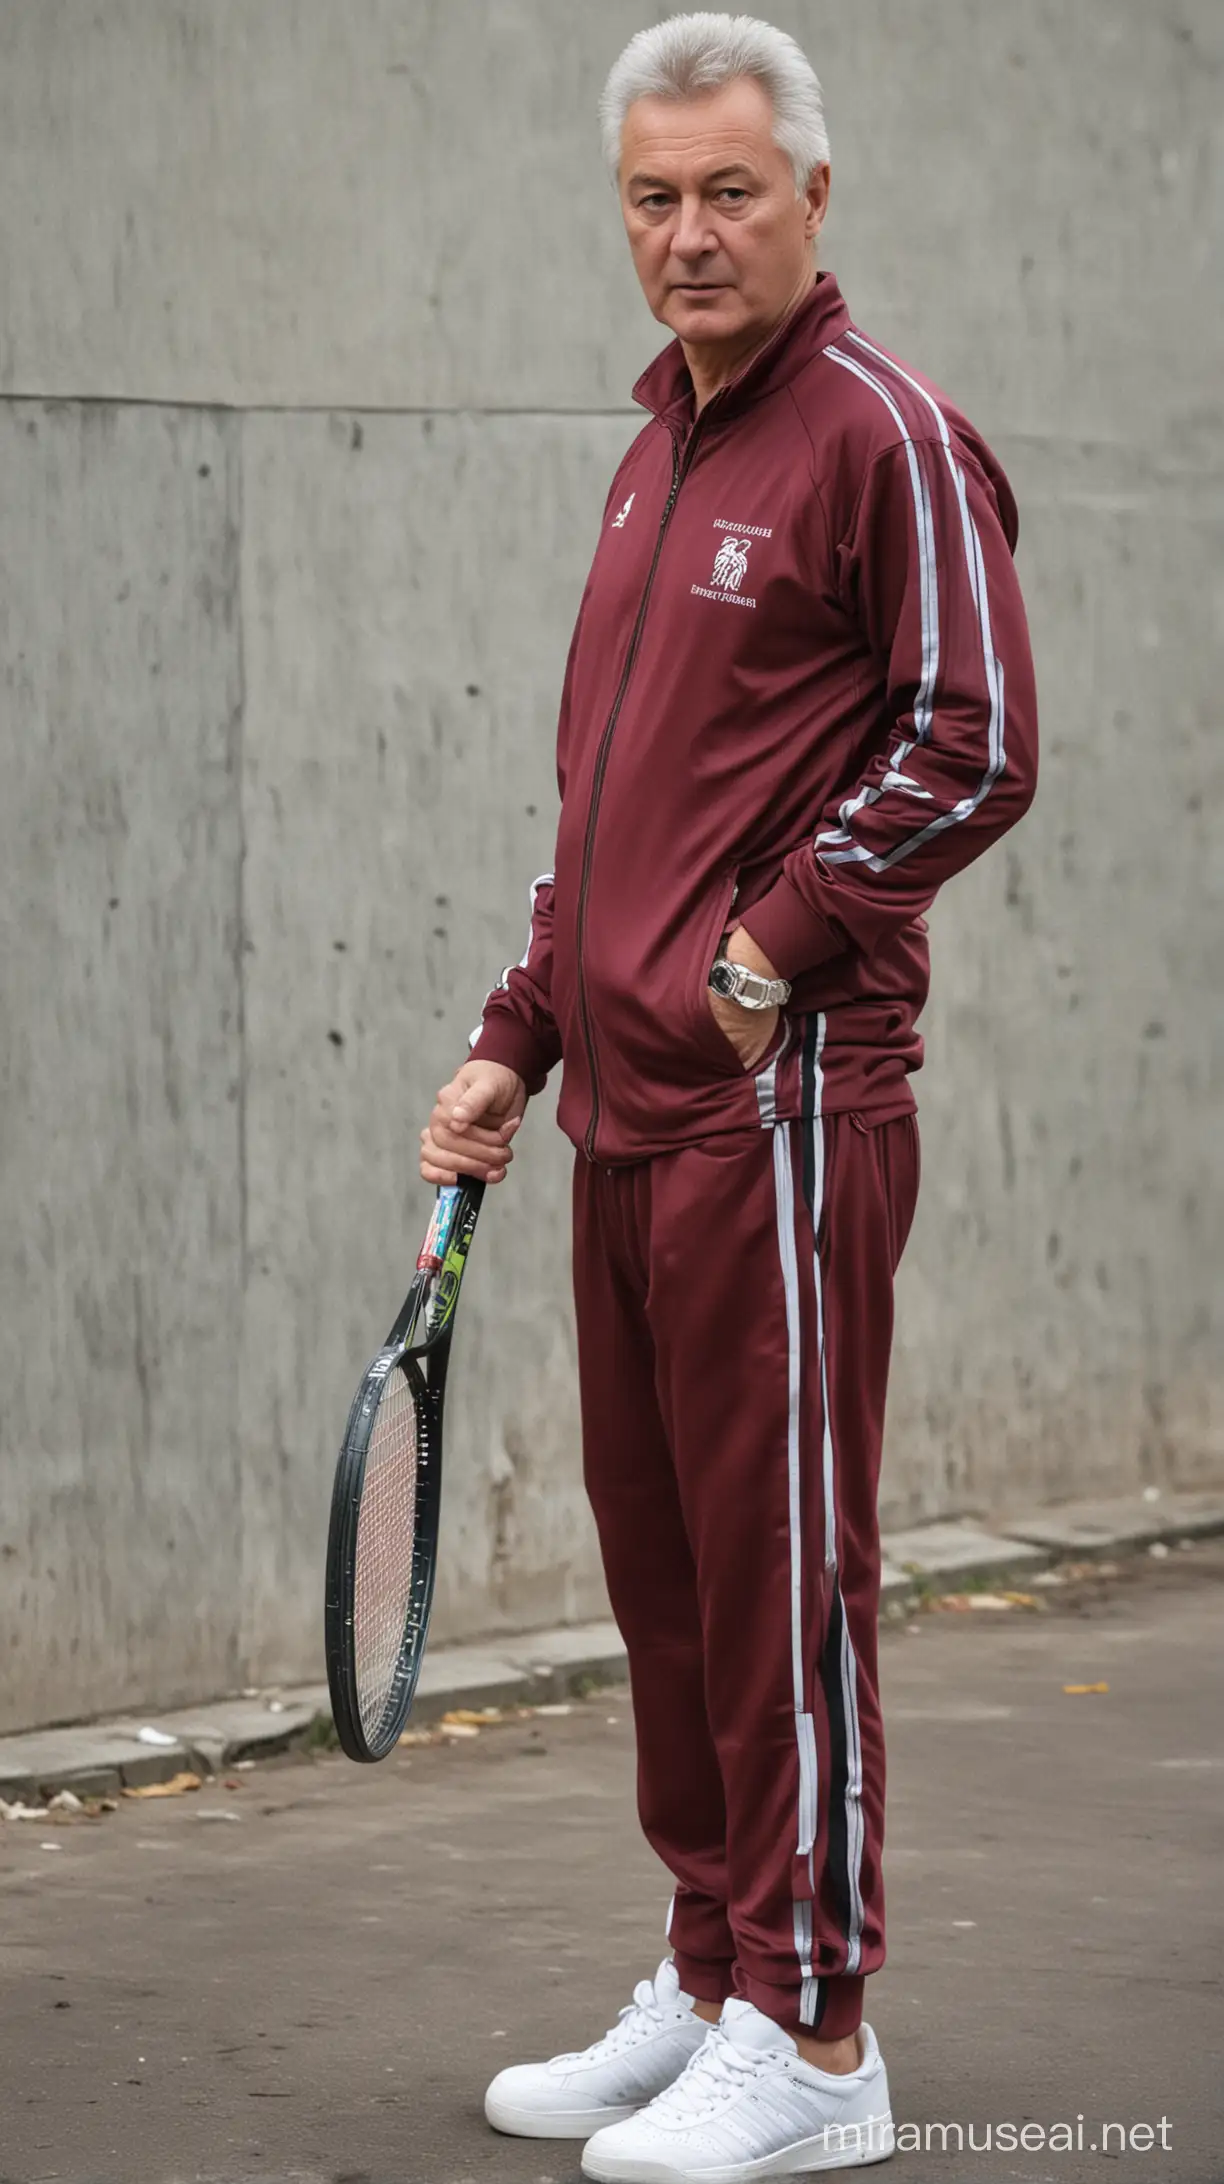 Sergei Sobyanin in Sporty Attire with Tennis Racket